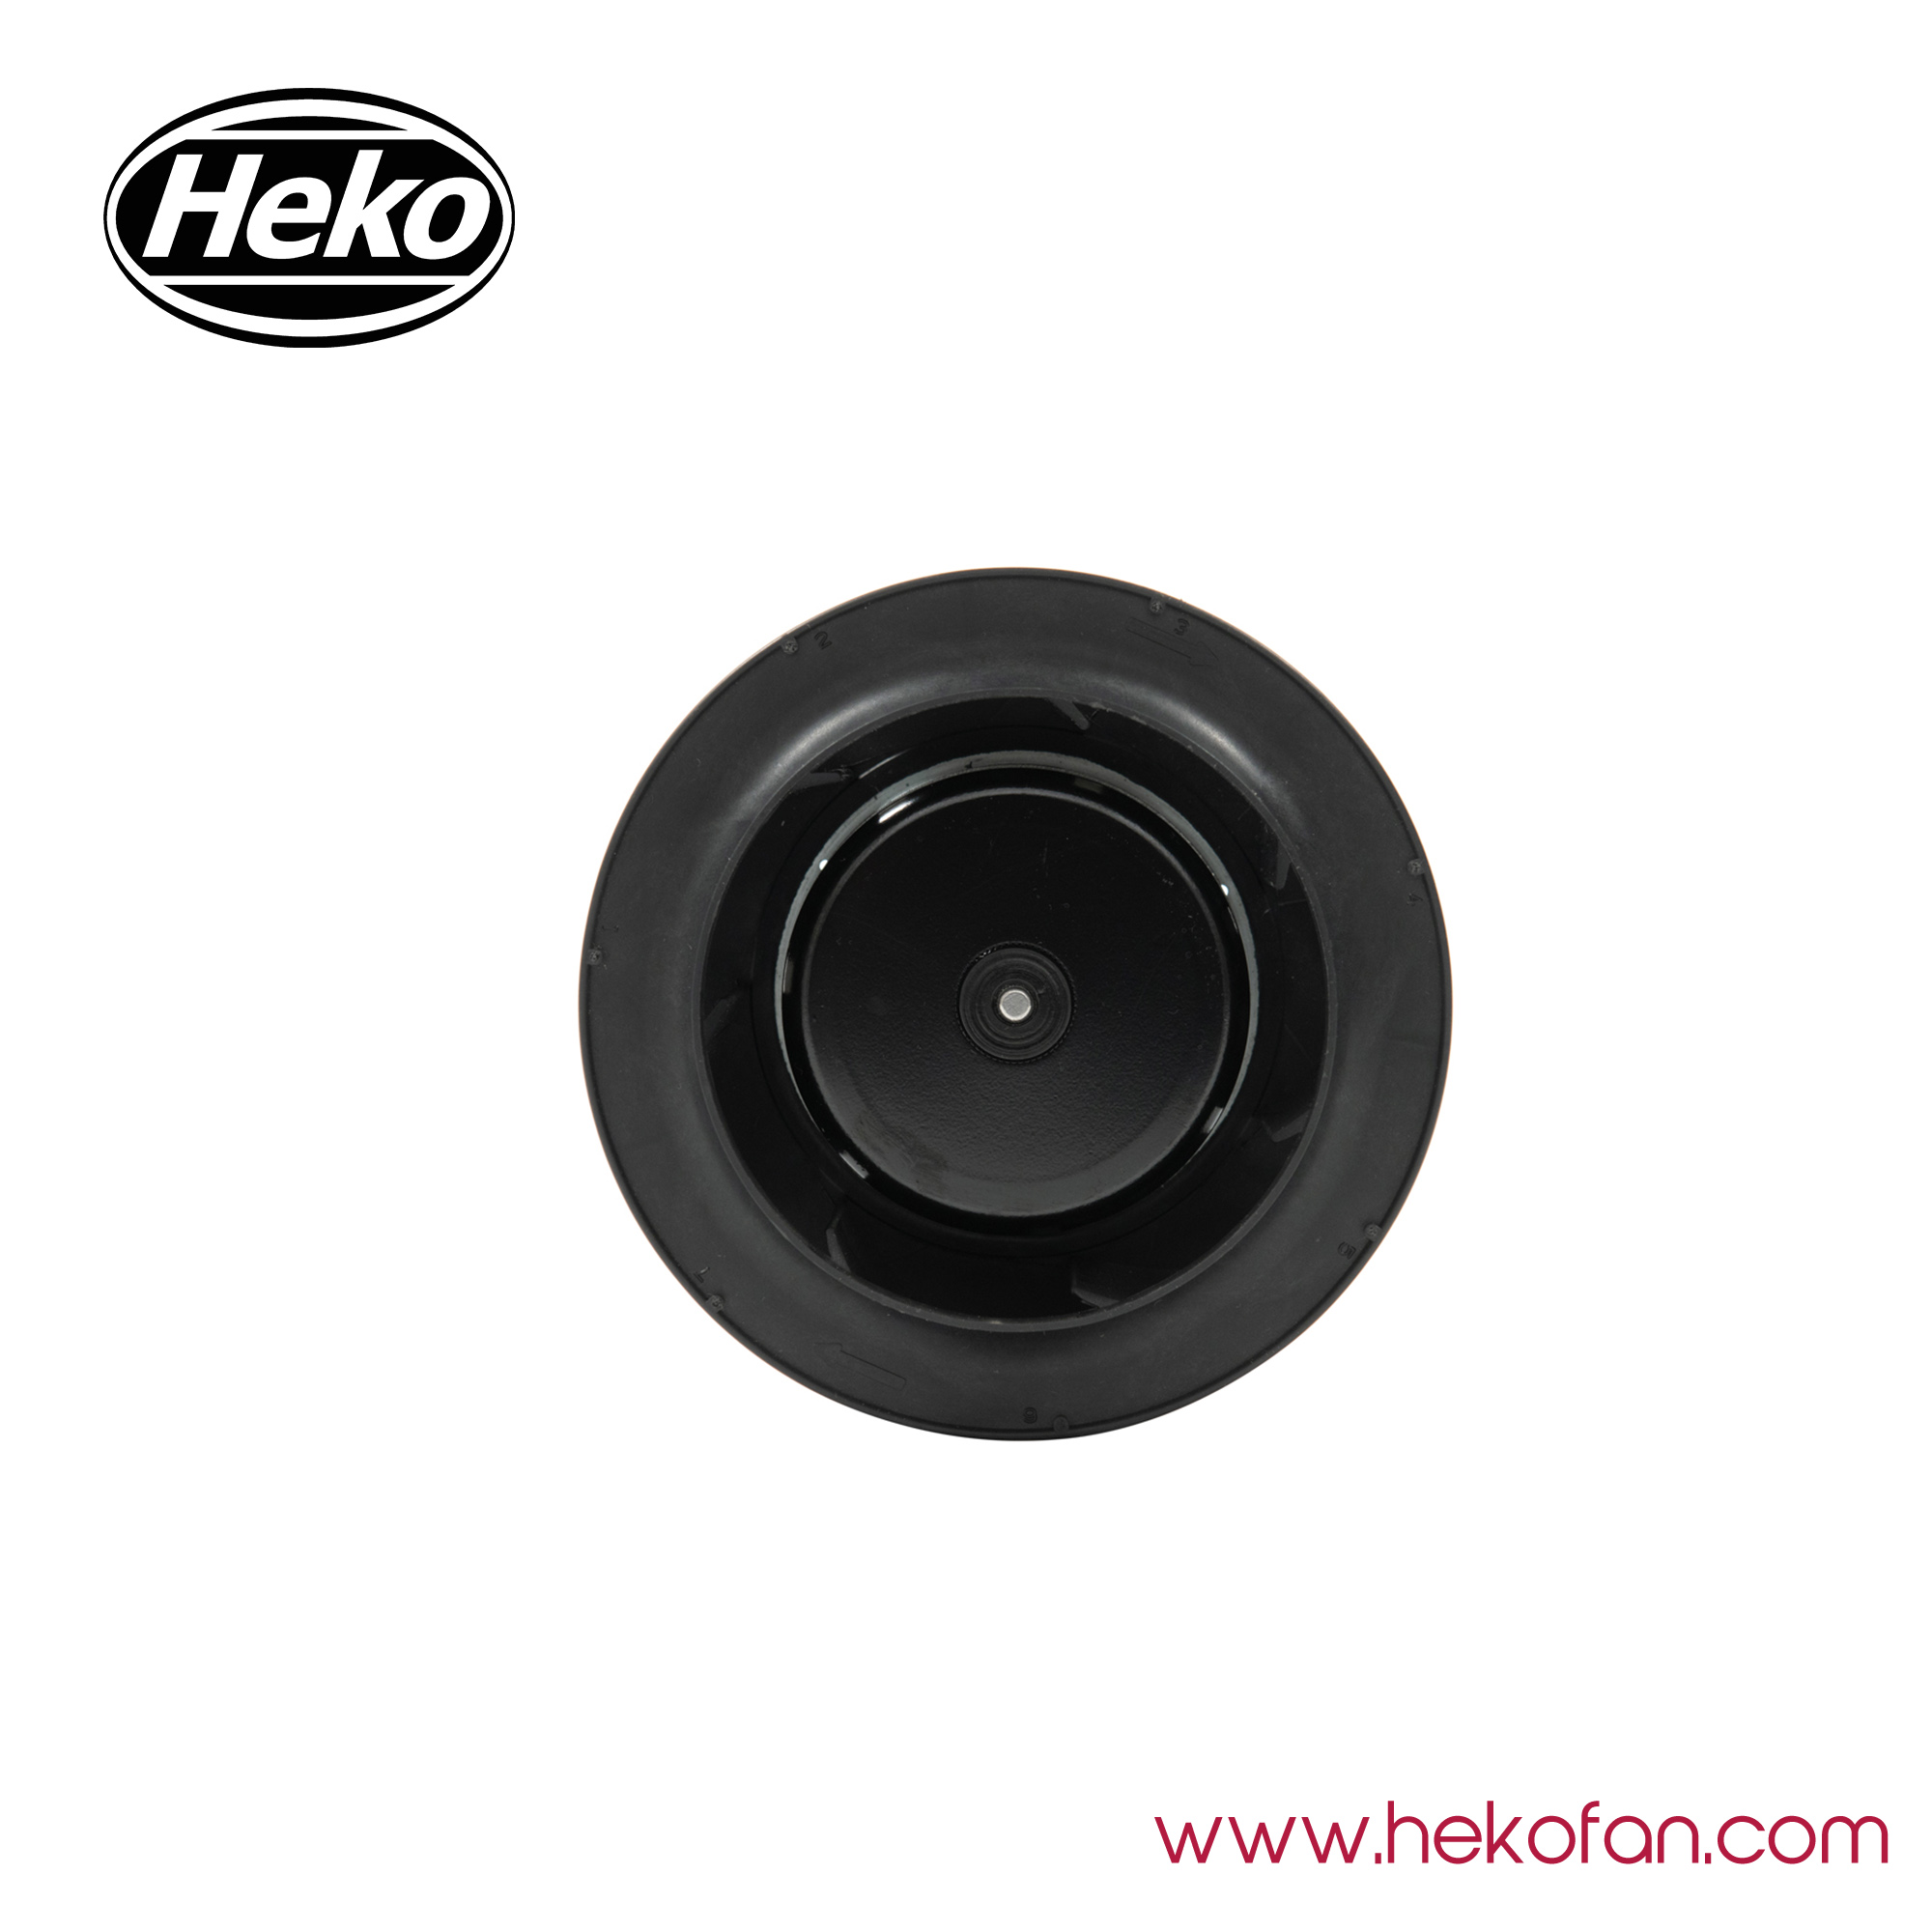 HEKO DC133mm High Speed Longer Life Backward Centrifugal Fan